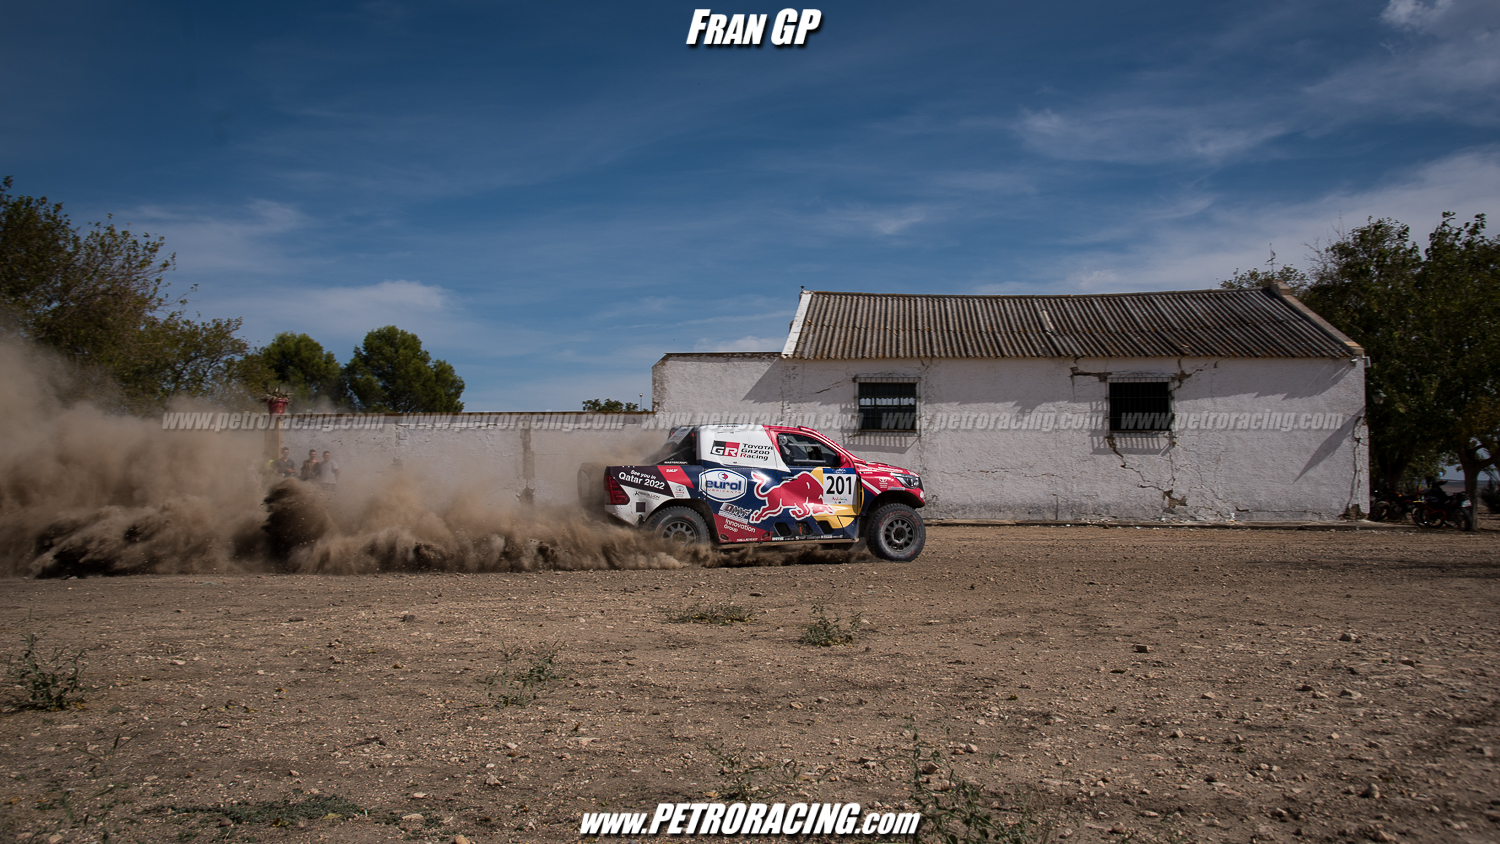 Andalucía Rally - FranGP